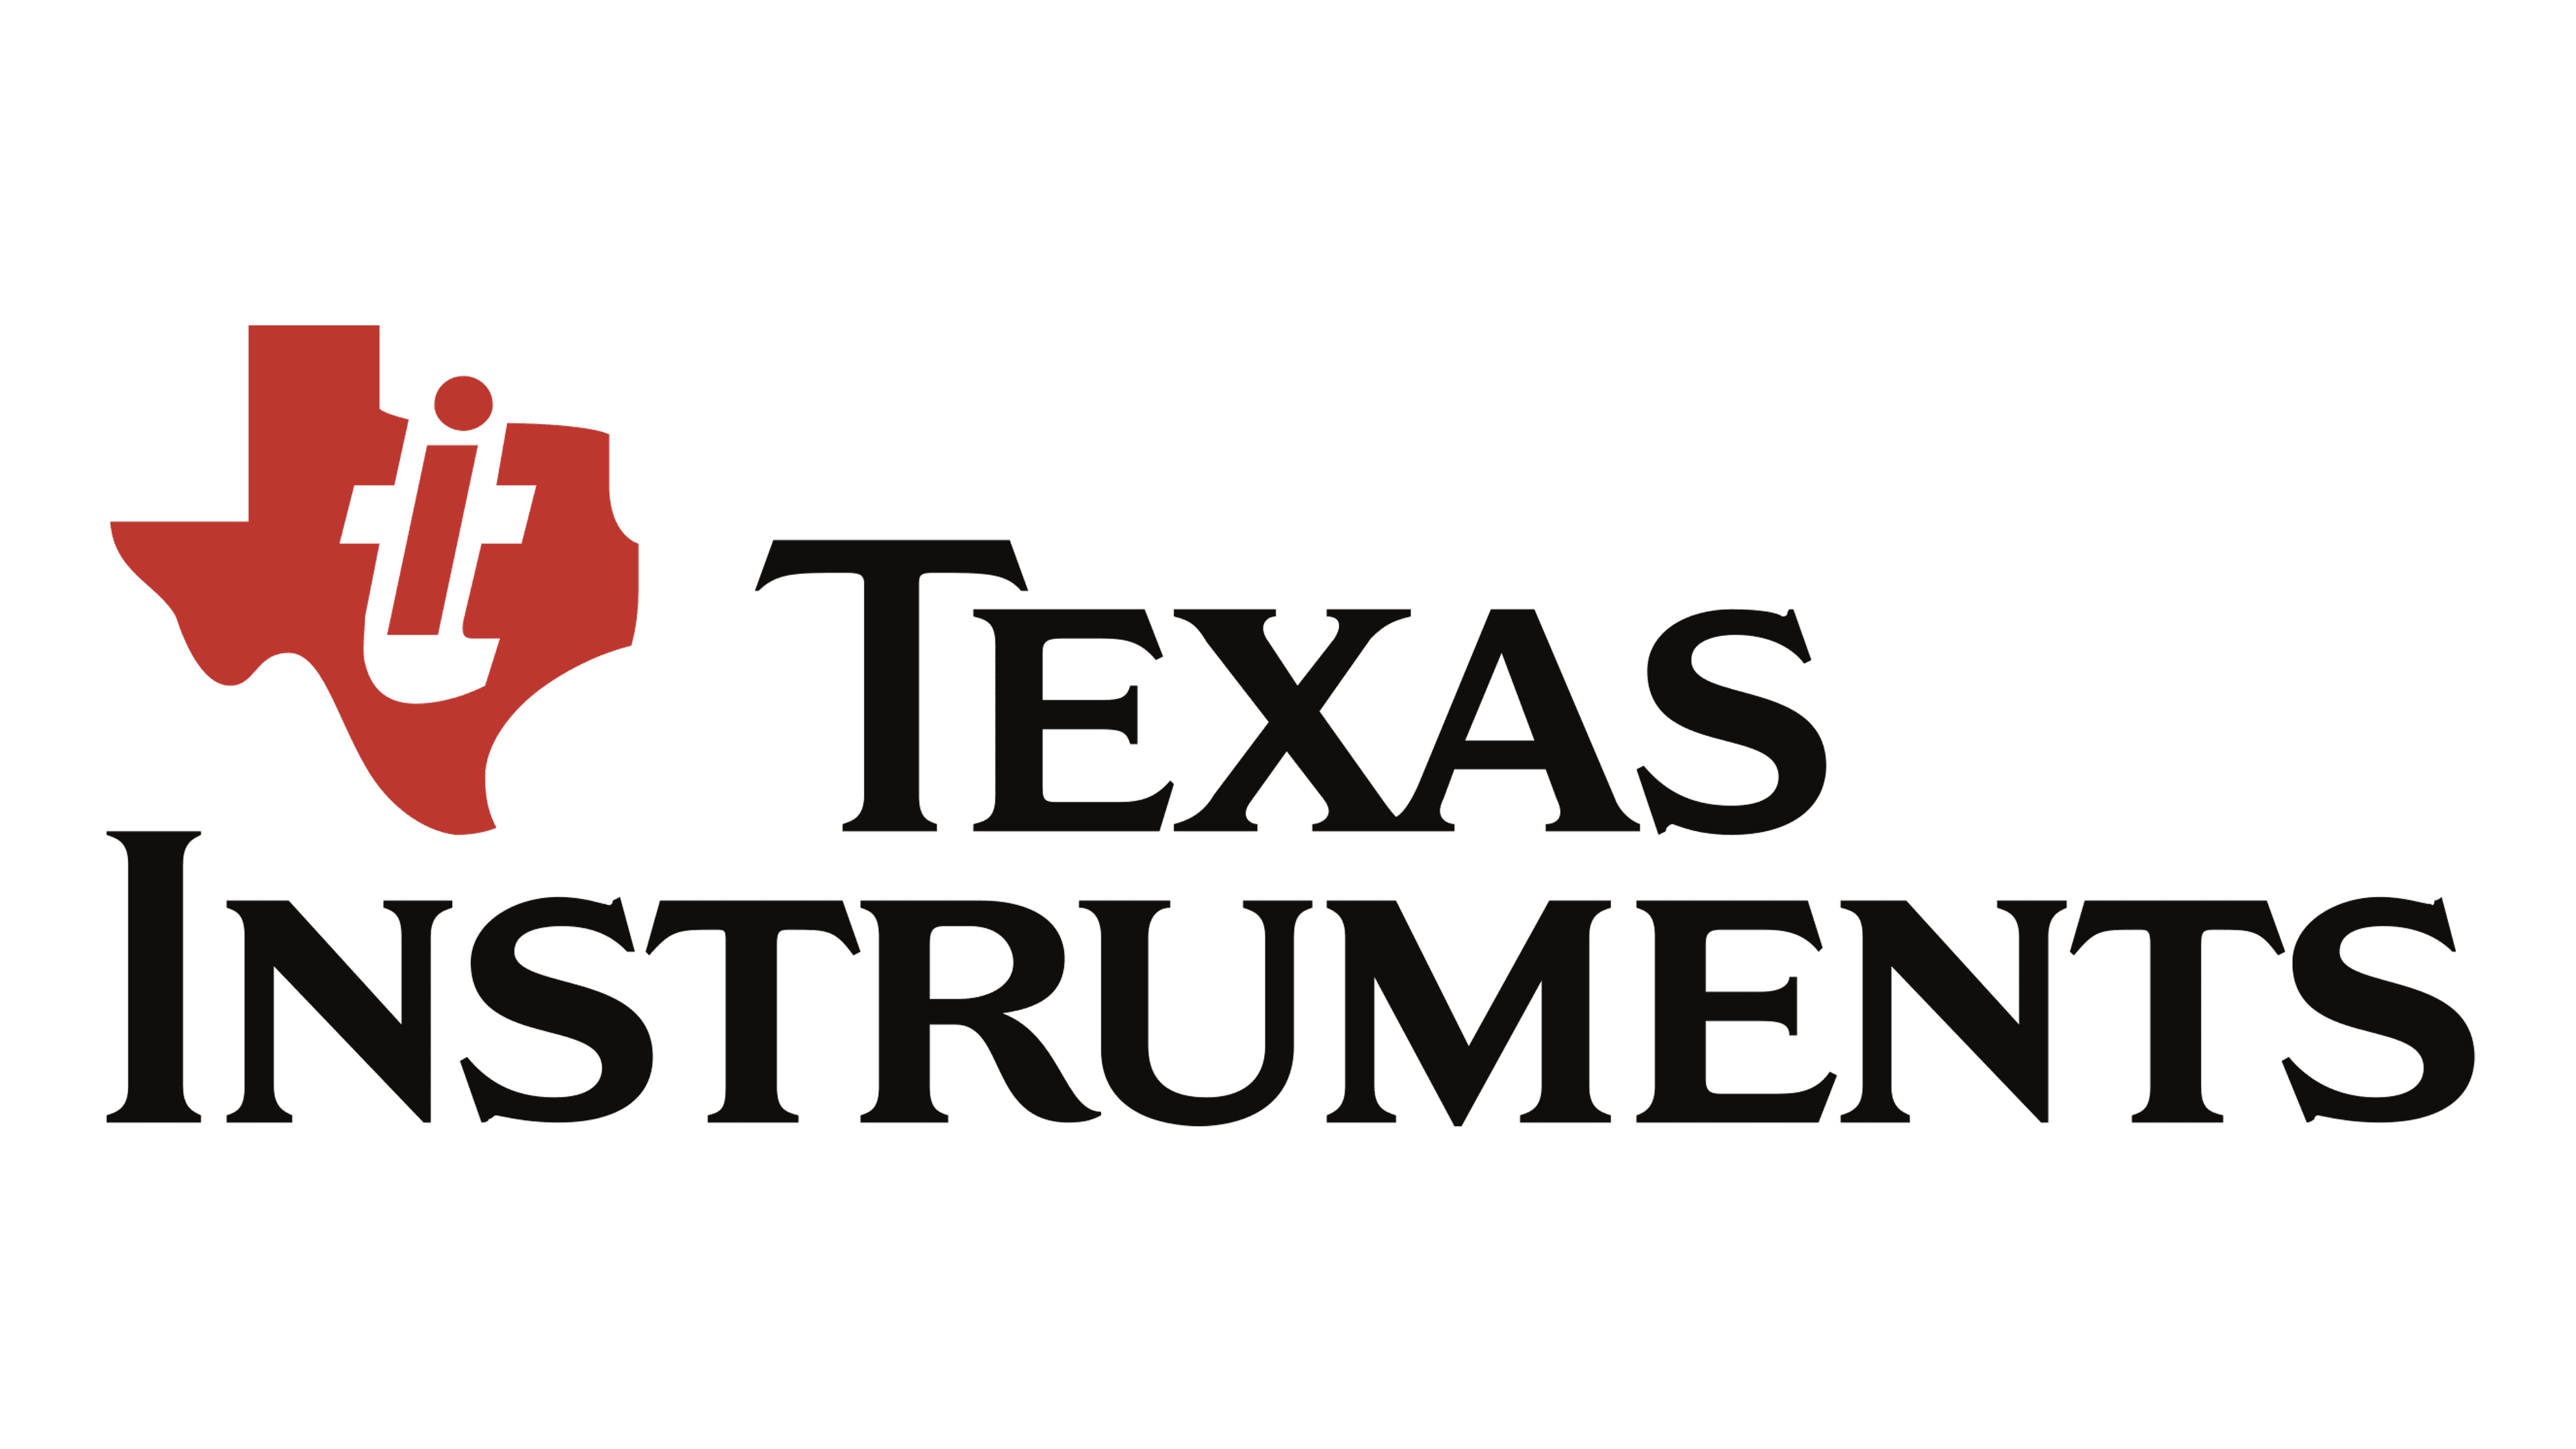 Texas-Instruments